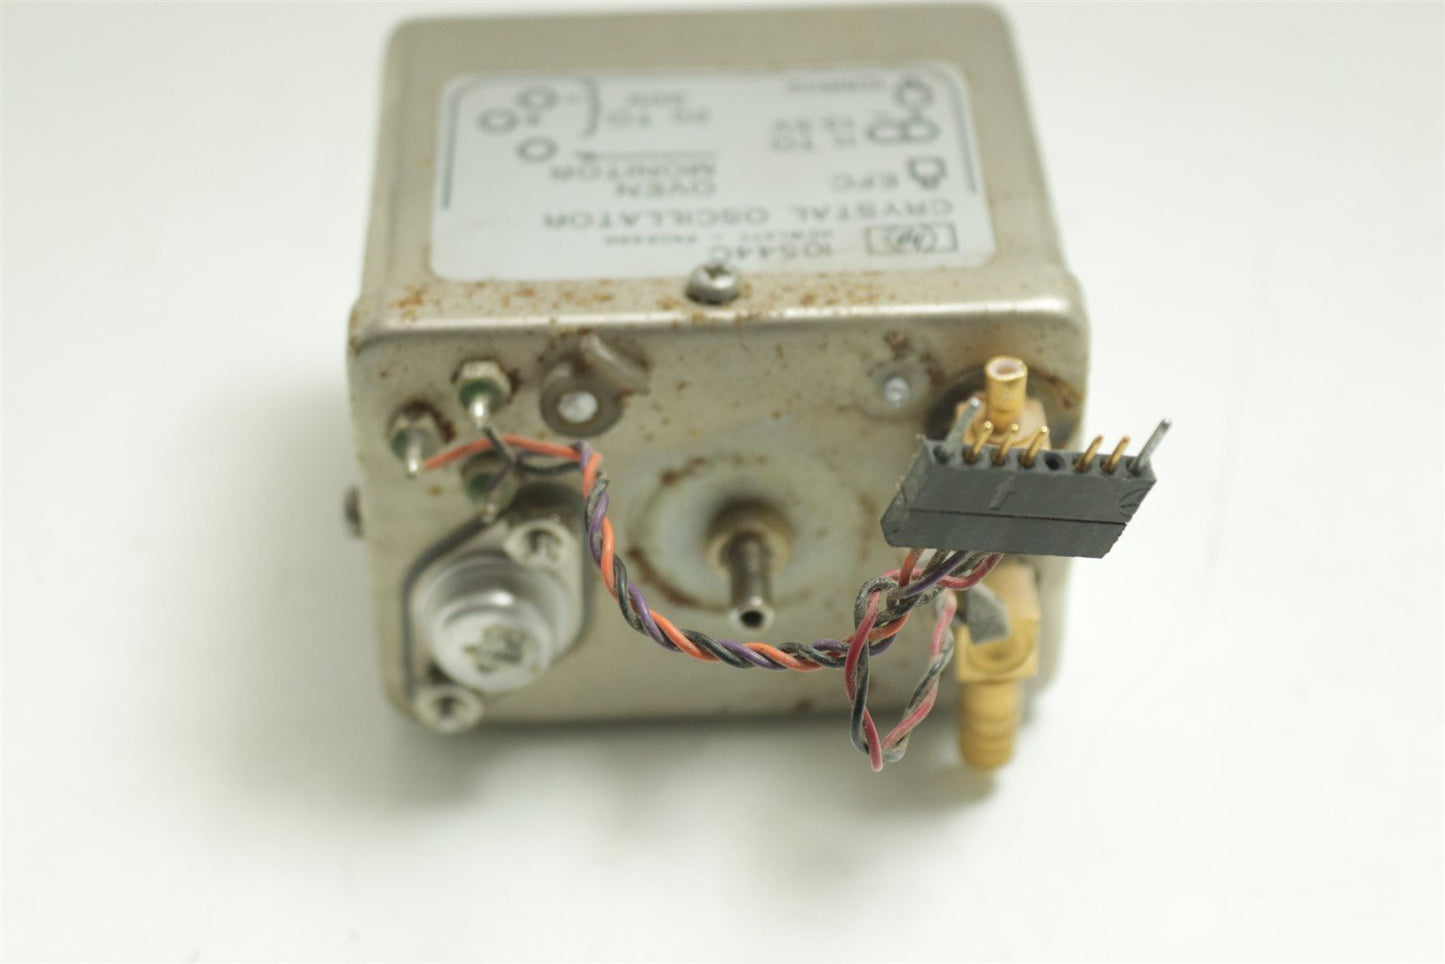 HP Agilent 8672A Signal Generator 2-18GHz Crystal Oscillator 10544C